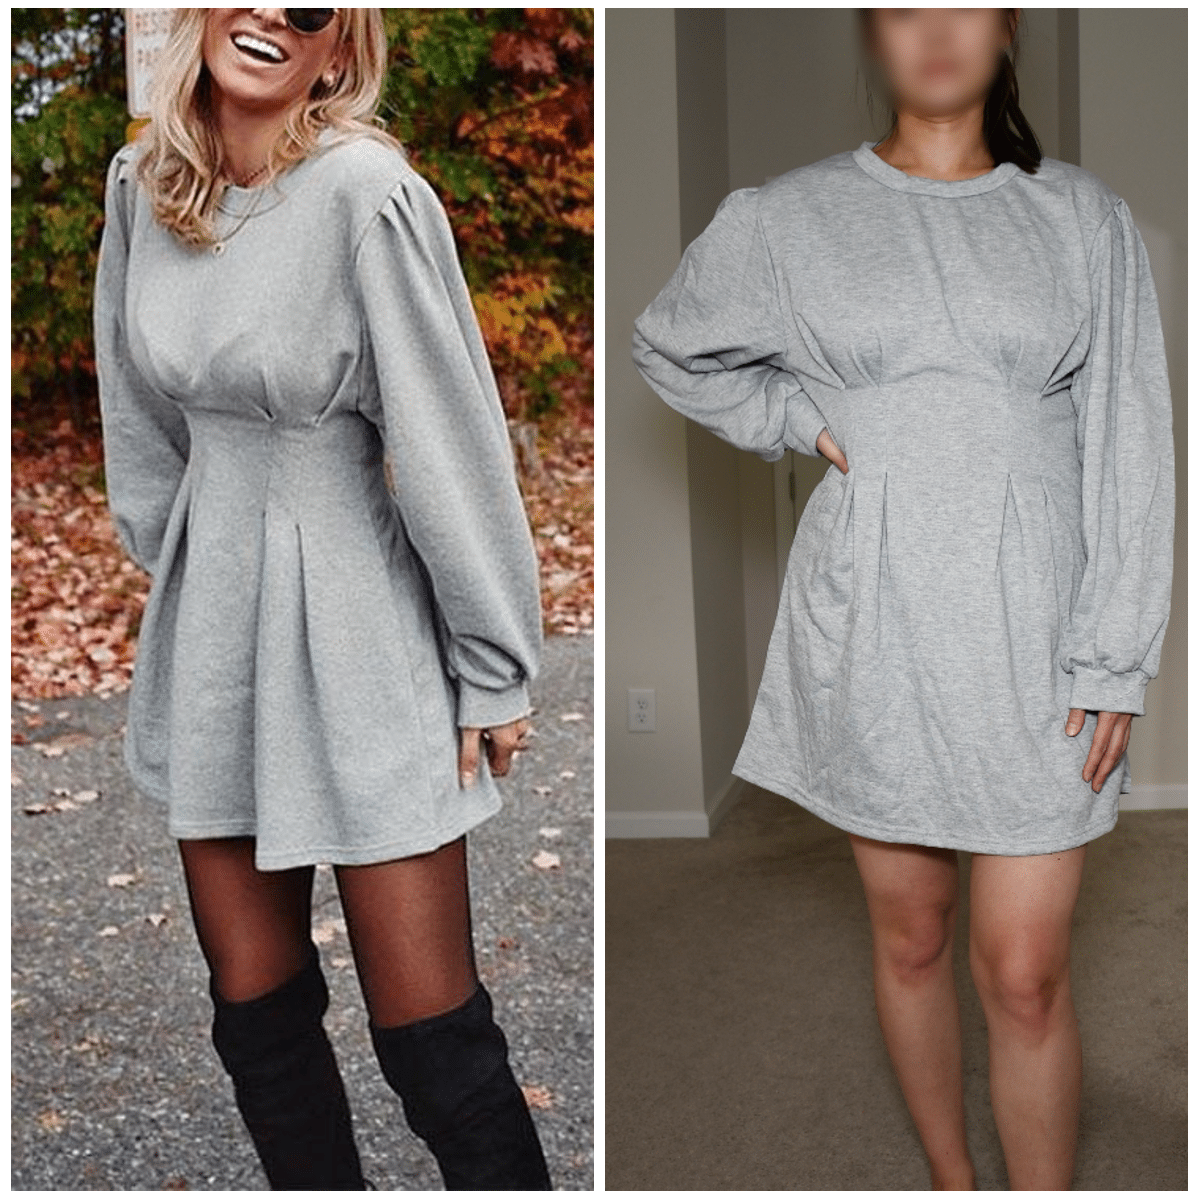 moxidress mini dress comparison